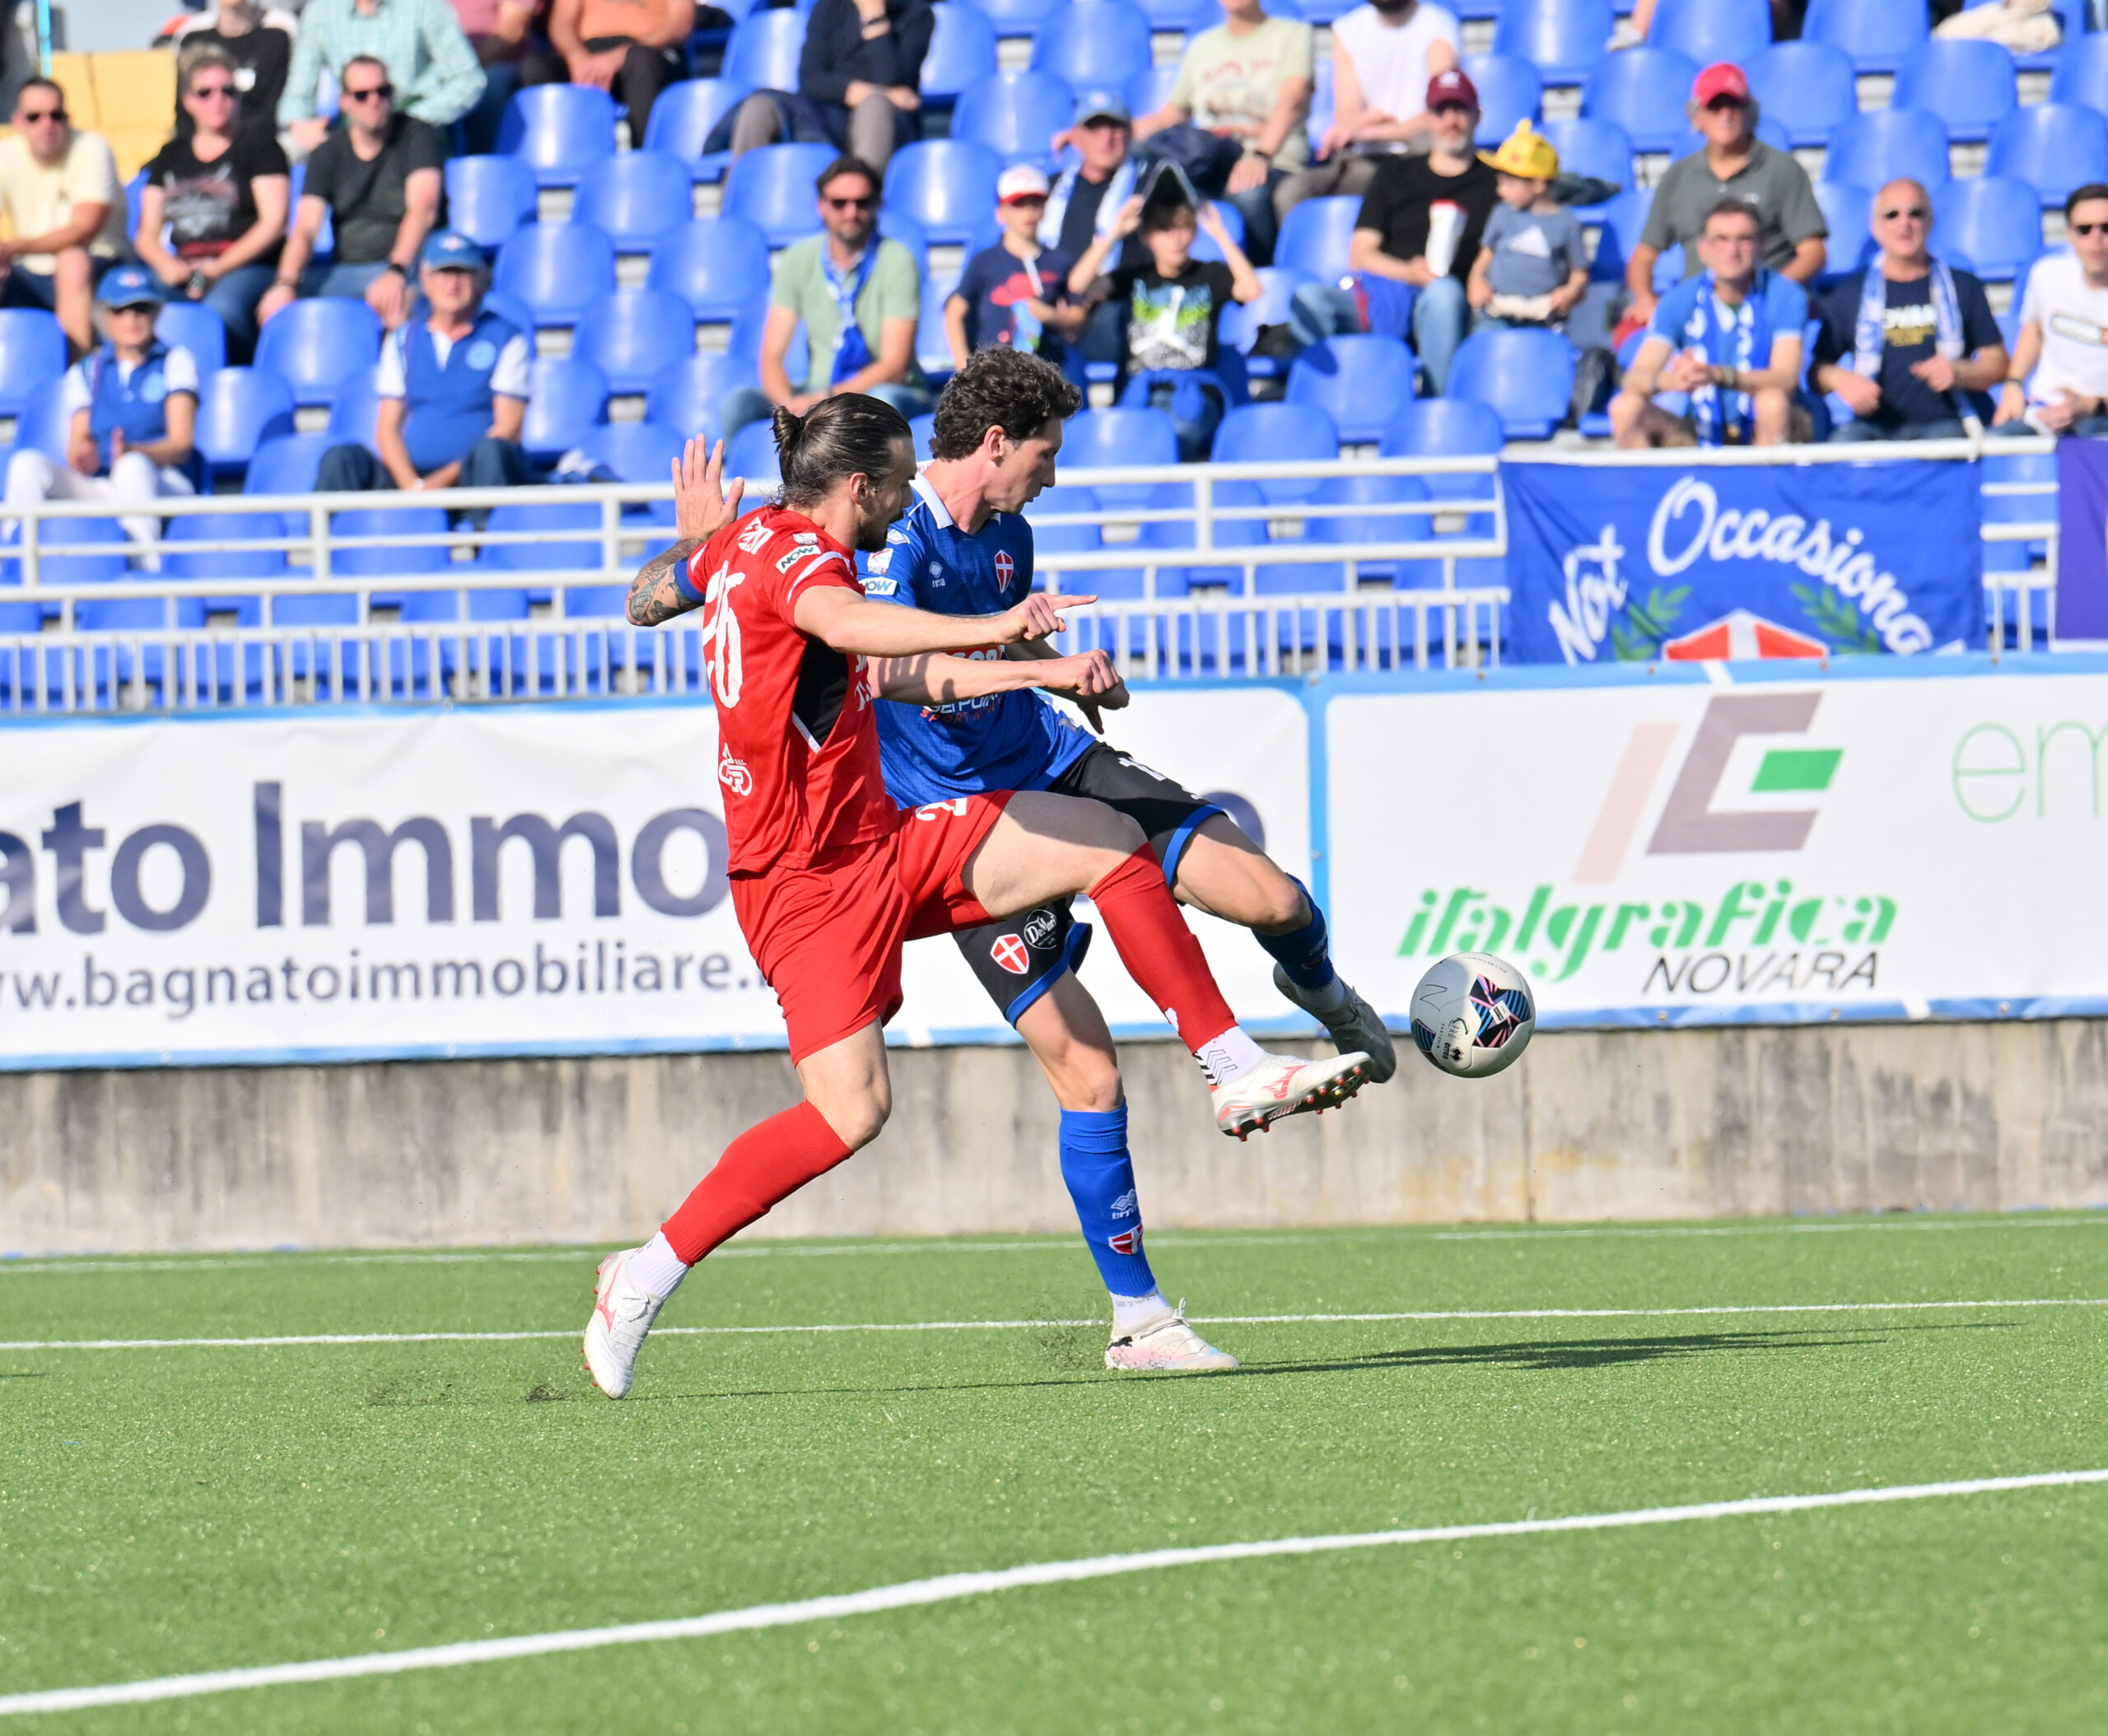 Read more about the article Novara-Fiorenzuola 2-1 | Tabellino del match